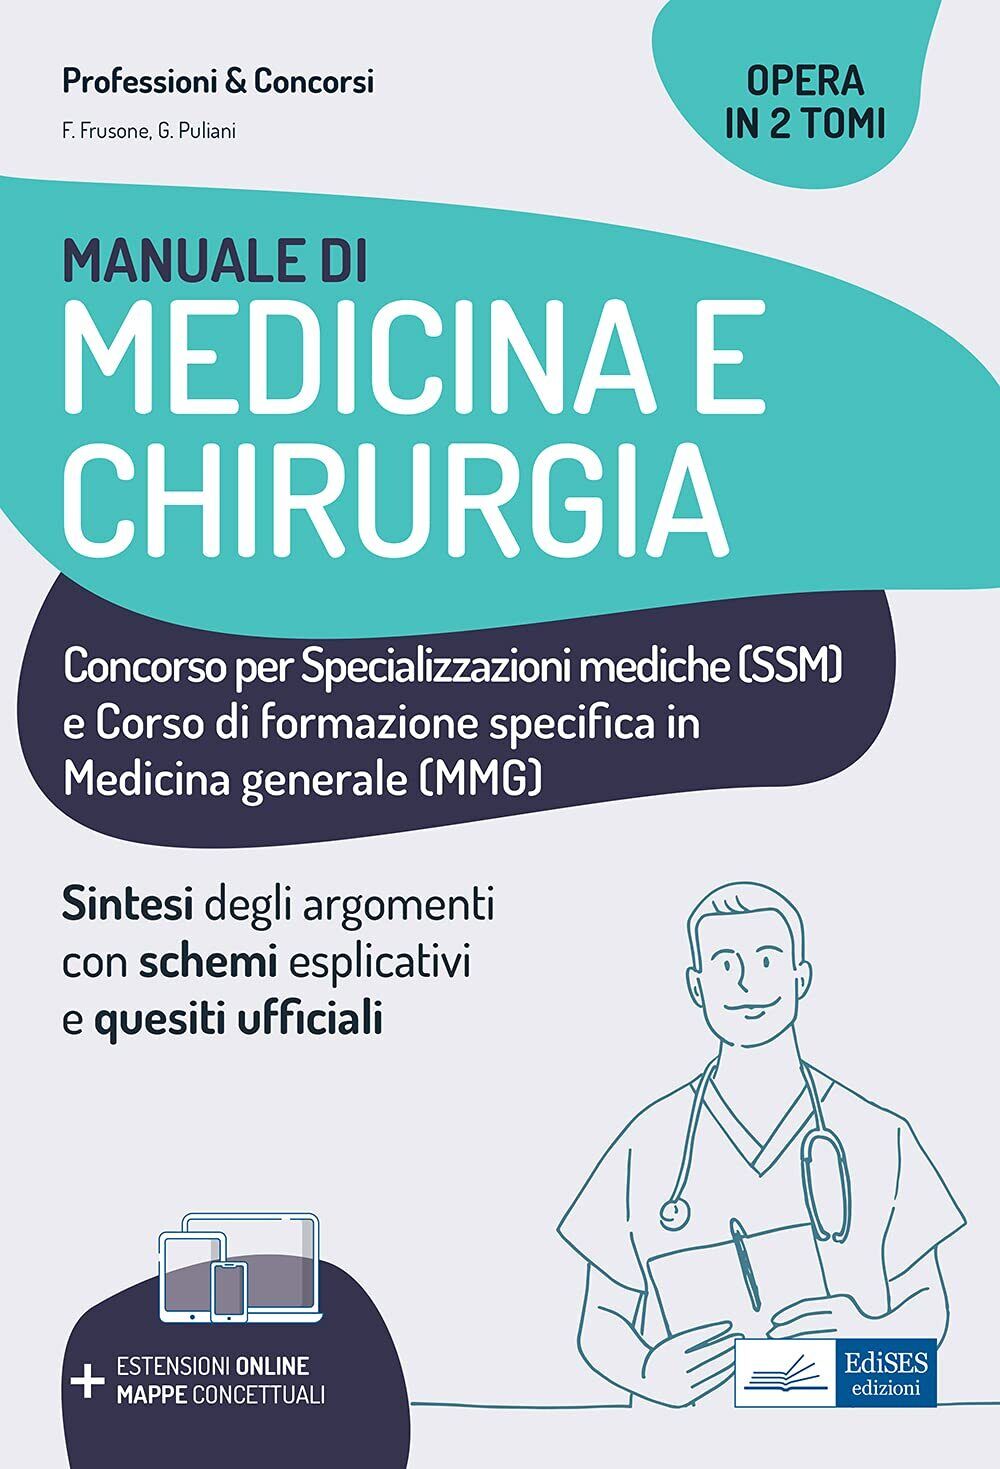 Manuale di medicina e chirurgia - Federico Frusone, Giulia Puliani - 2021